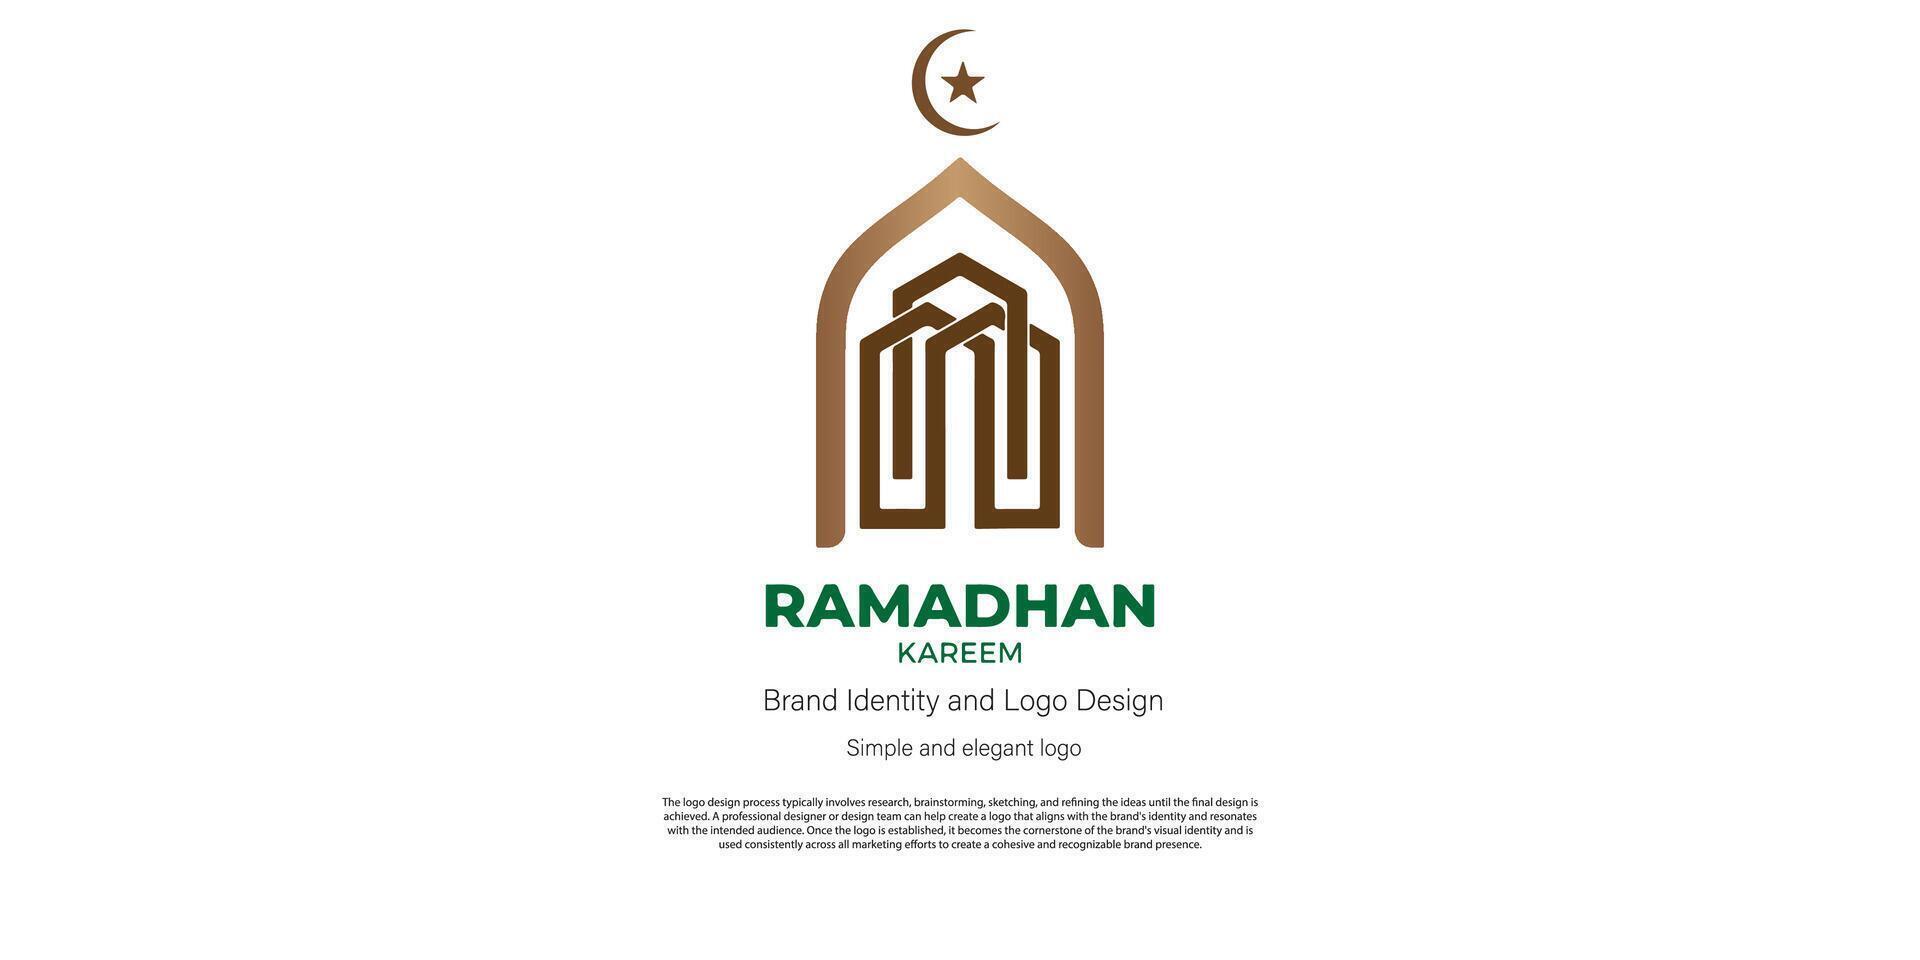 Islamic and ramadhan kareem logo design for graphic designer and web developer vector